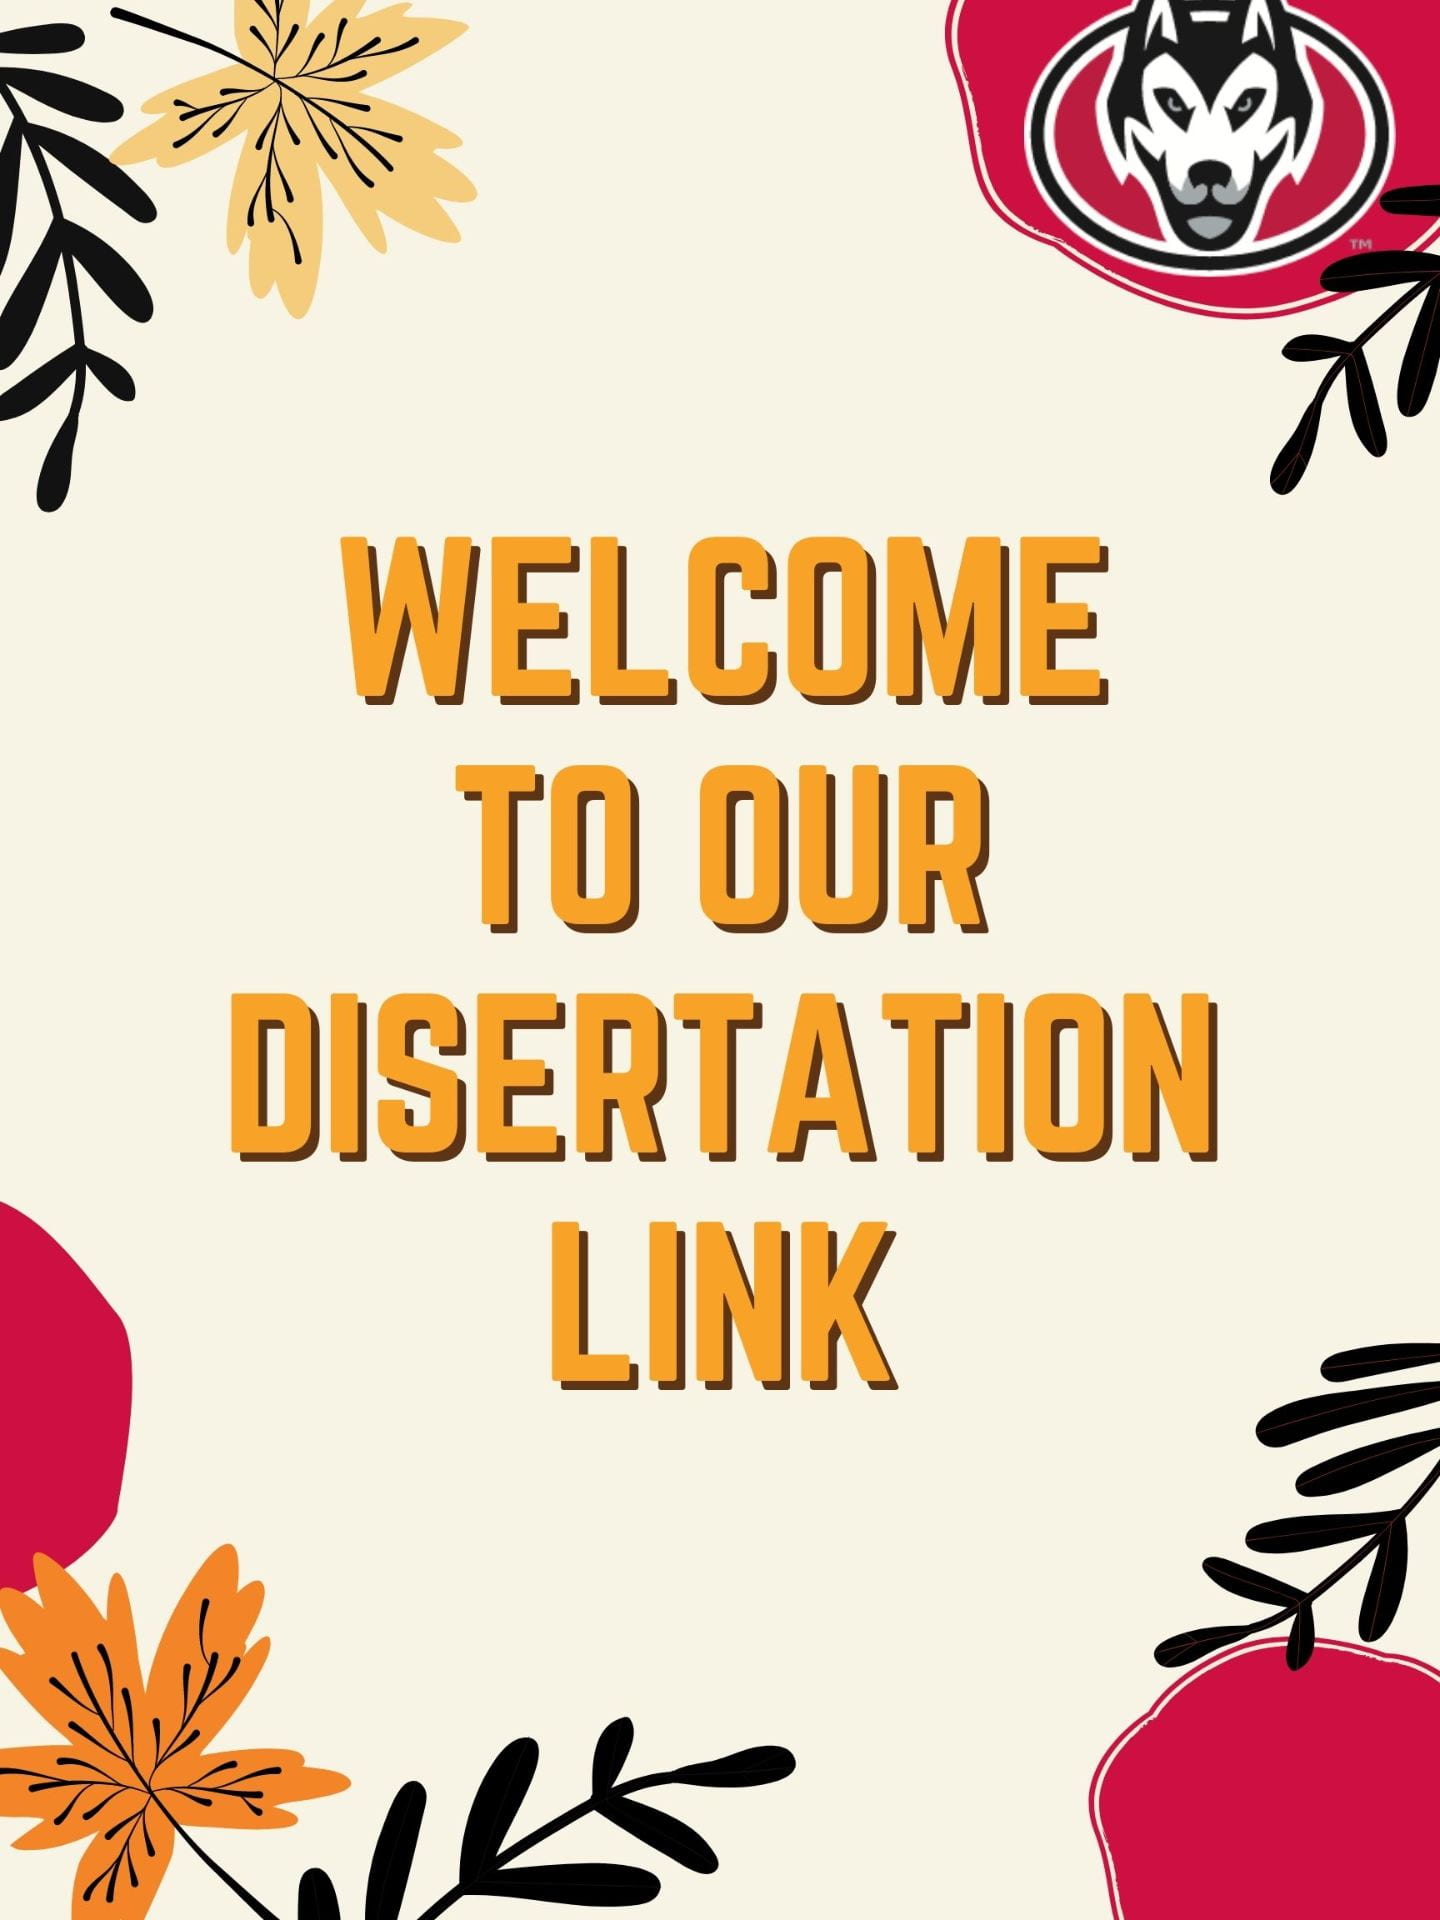 The Dissertatin Link!!!